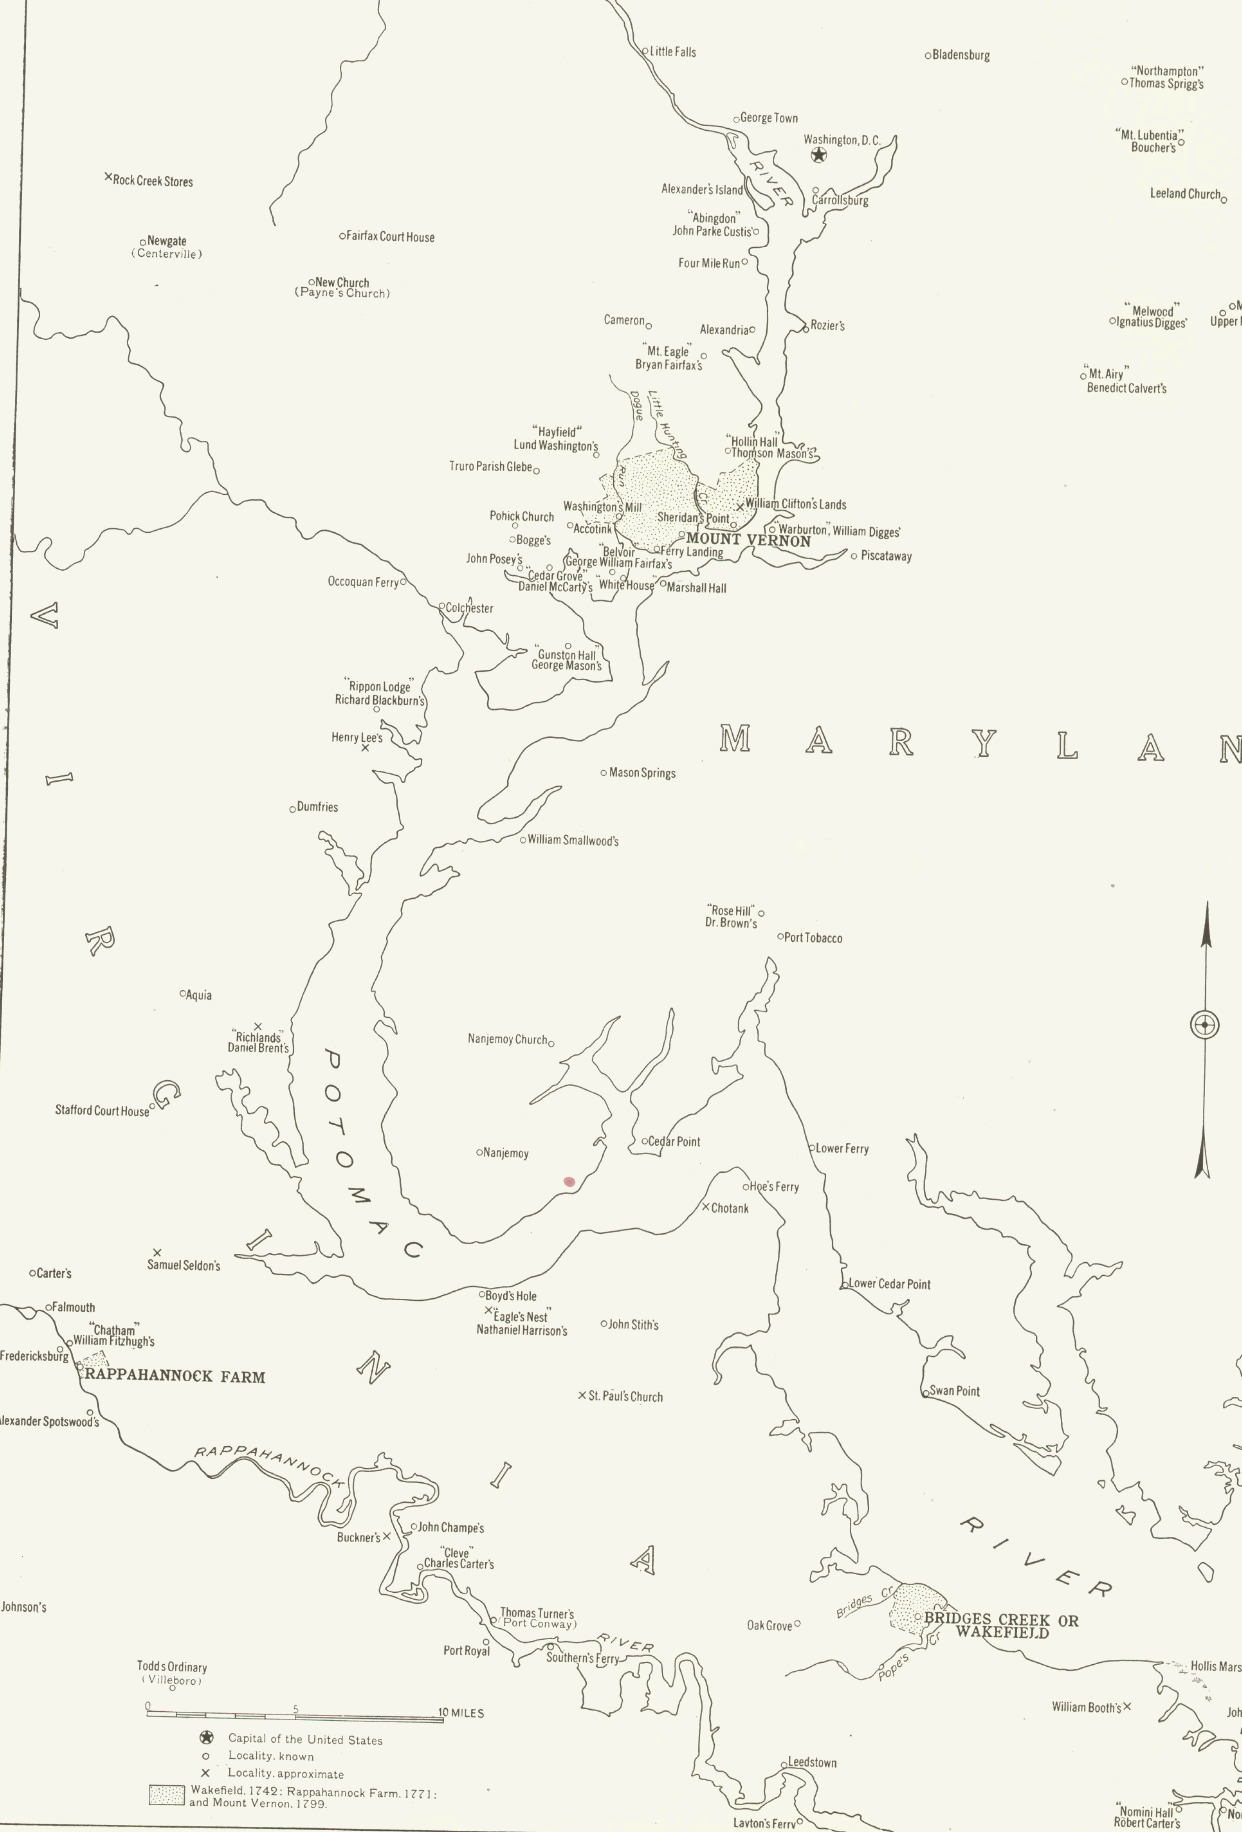 Map of lower Potomac region